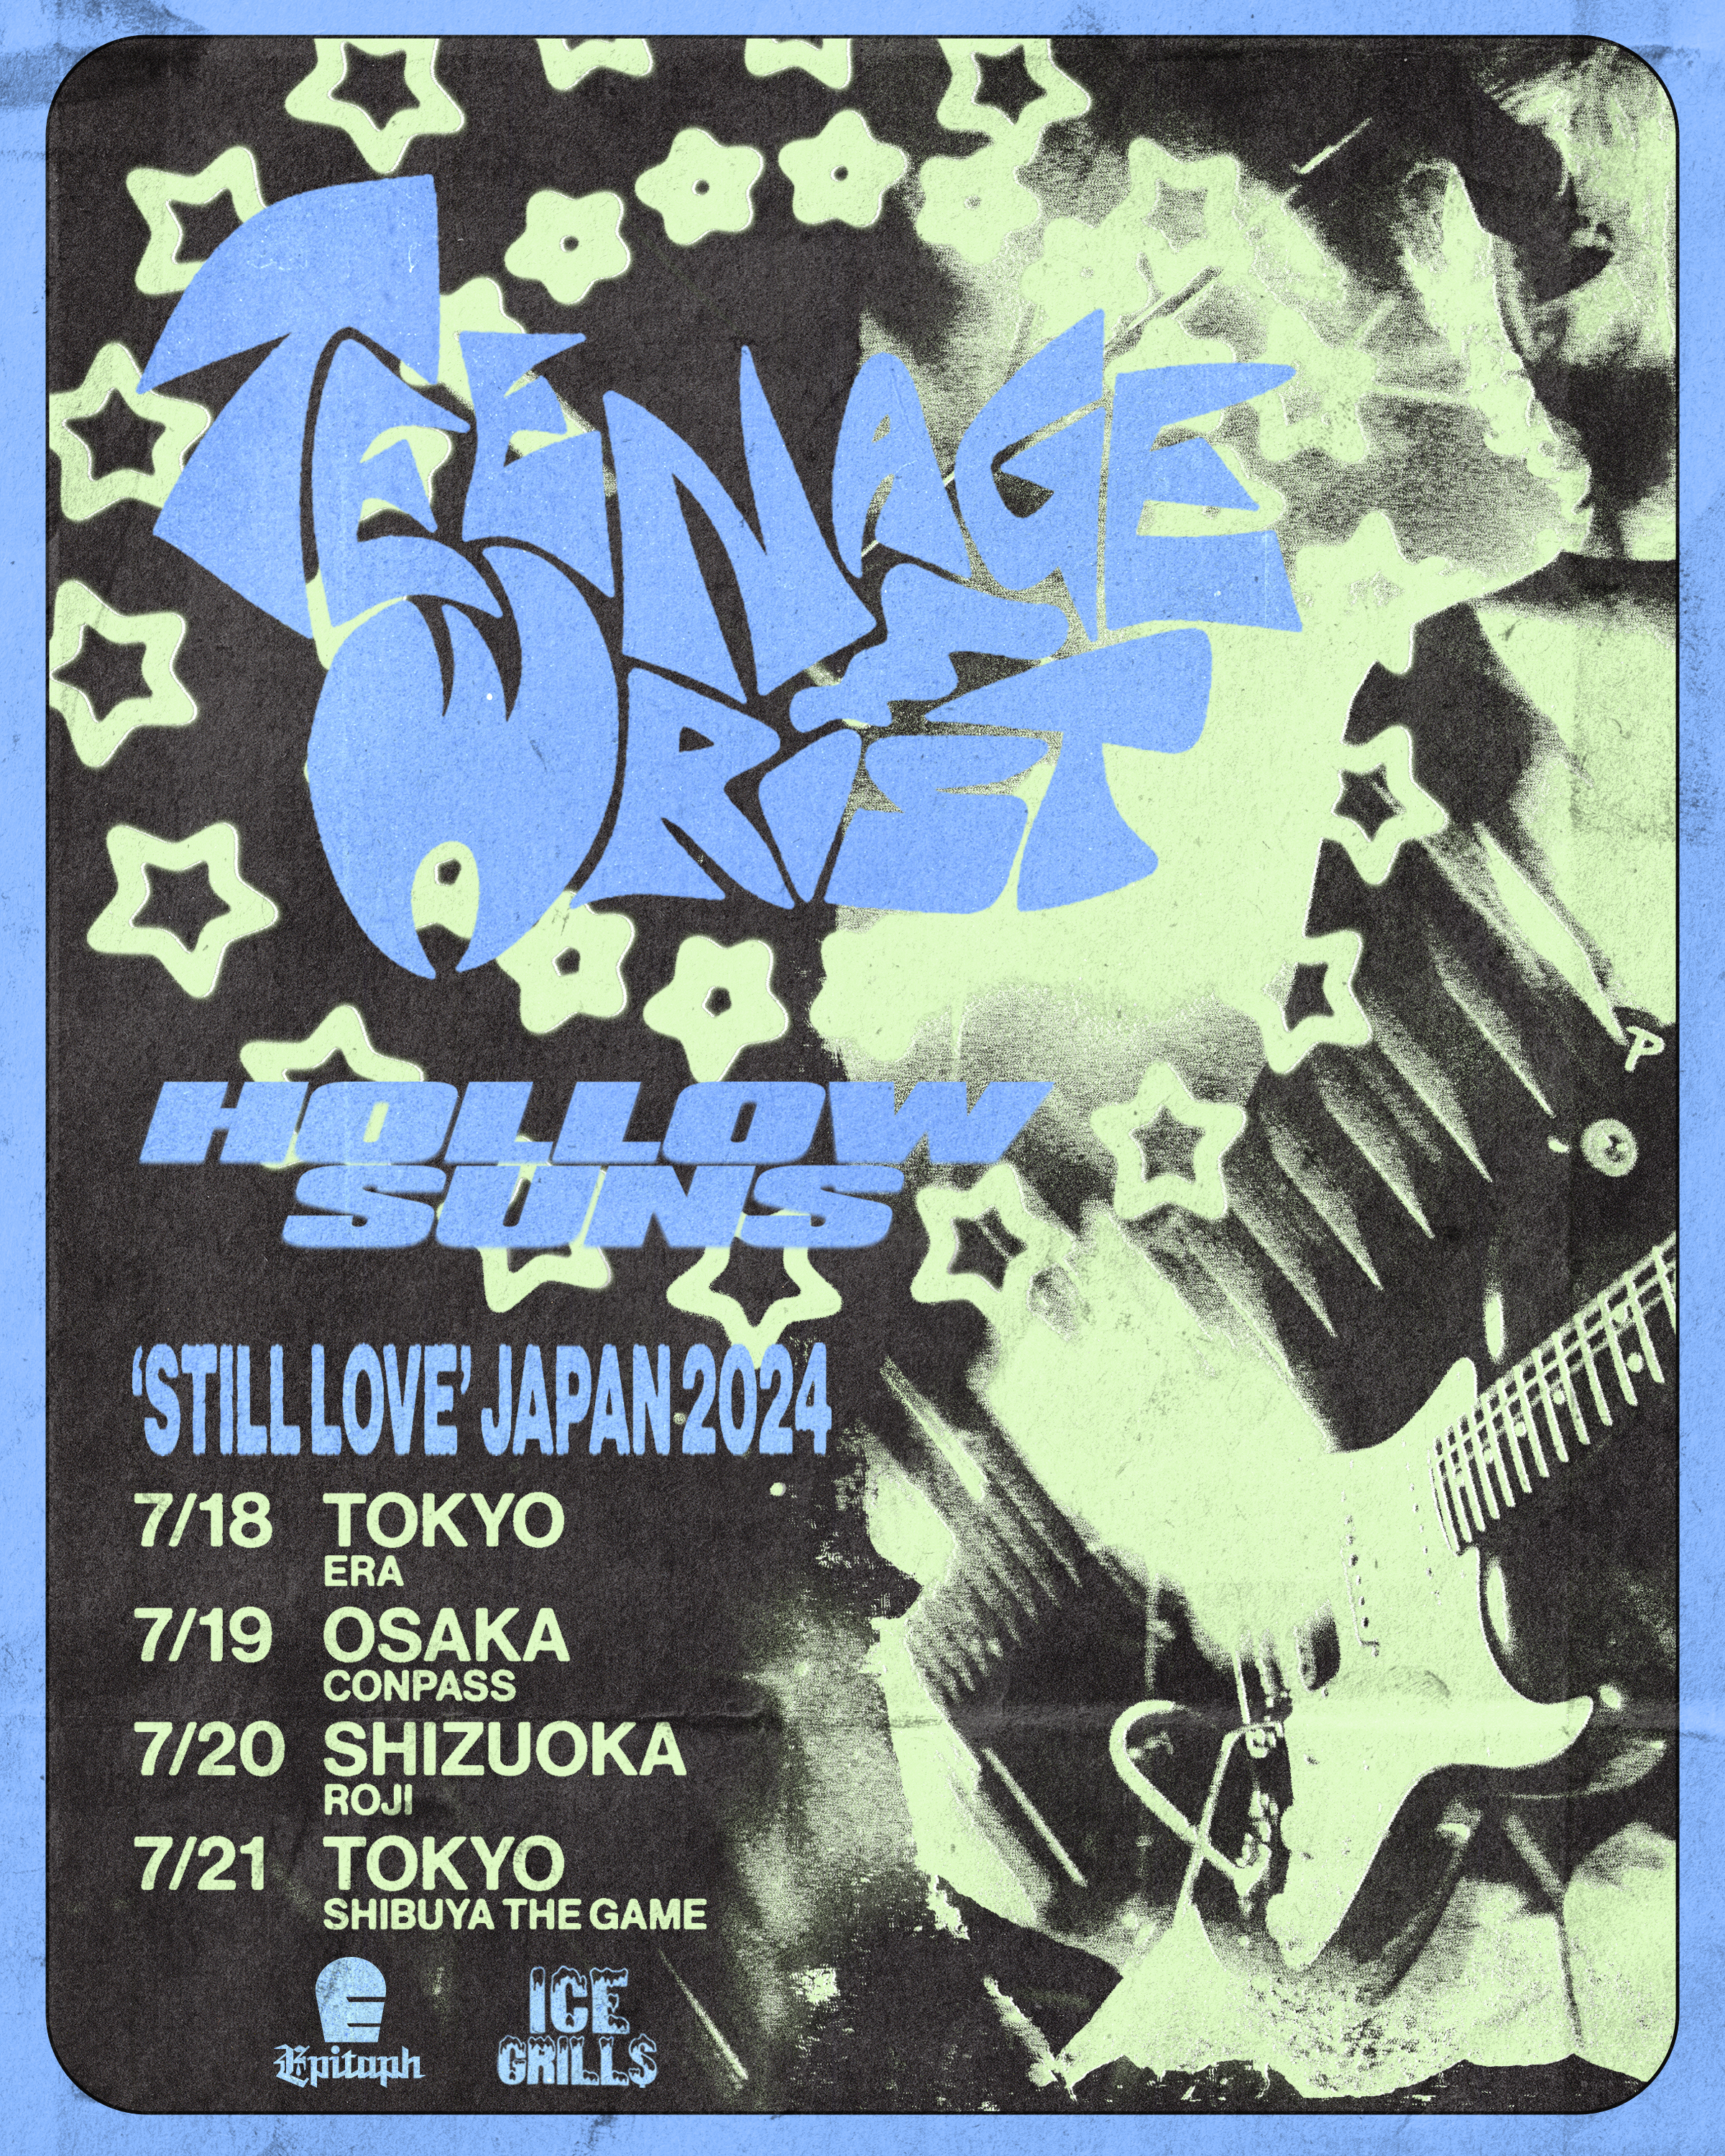 Teenage Wrist – ‘Still Love’ Japan 2024 with Hollow Suns announced